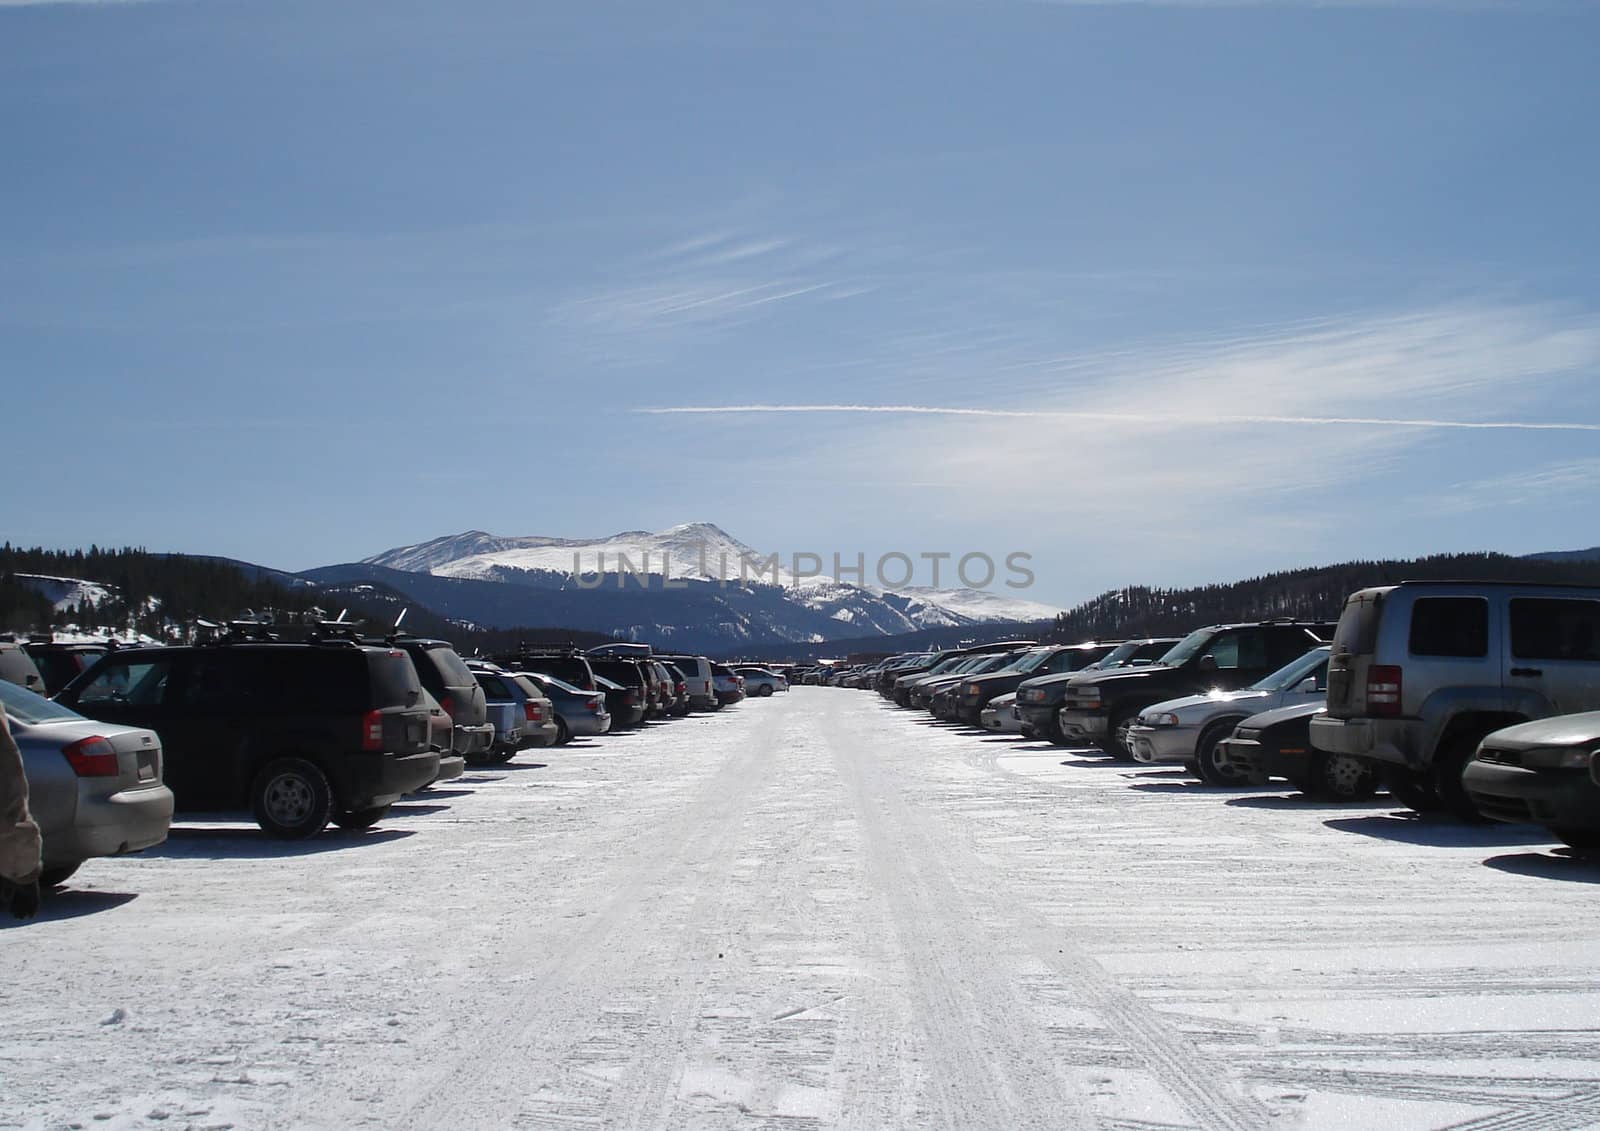 Ski Resort Parking Lot by gilmourbto2001